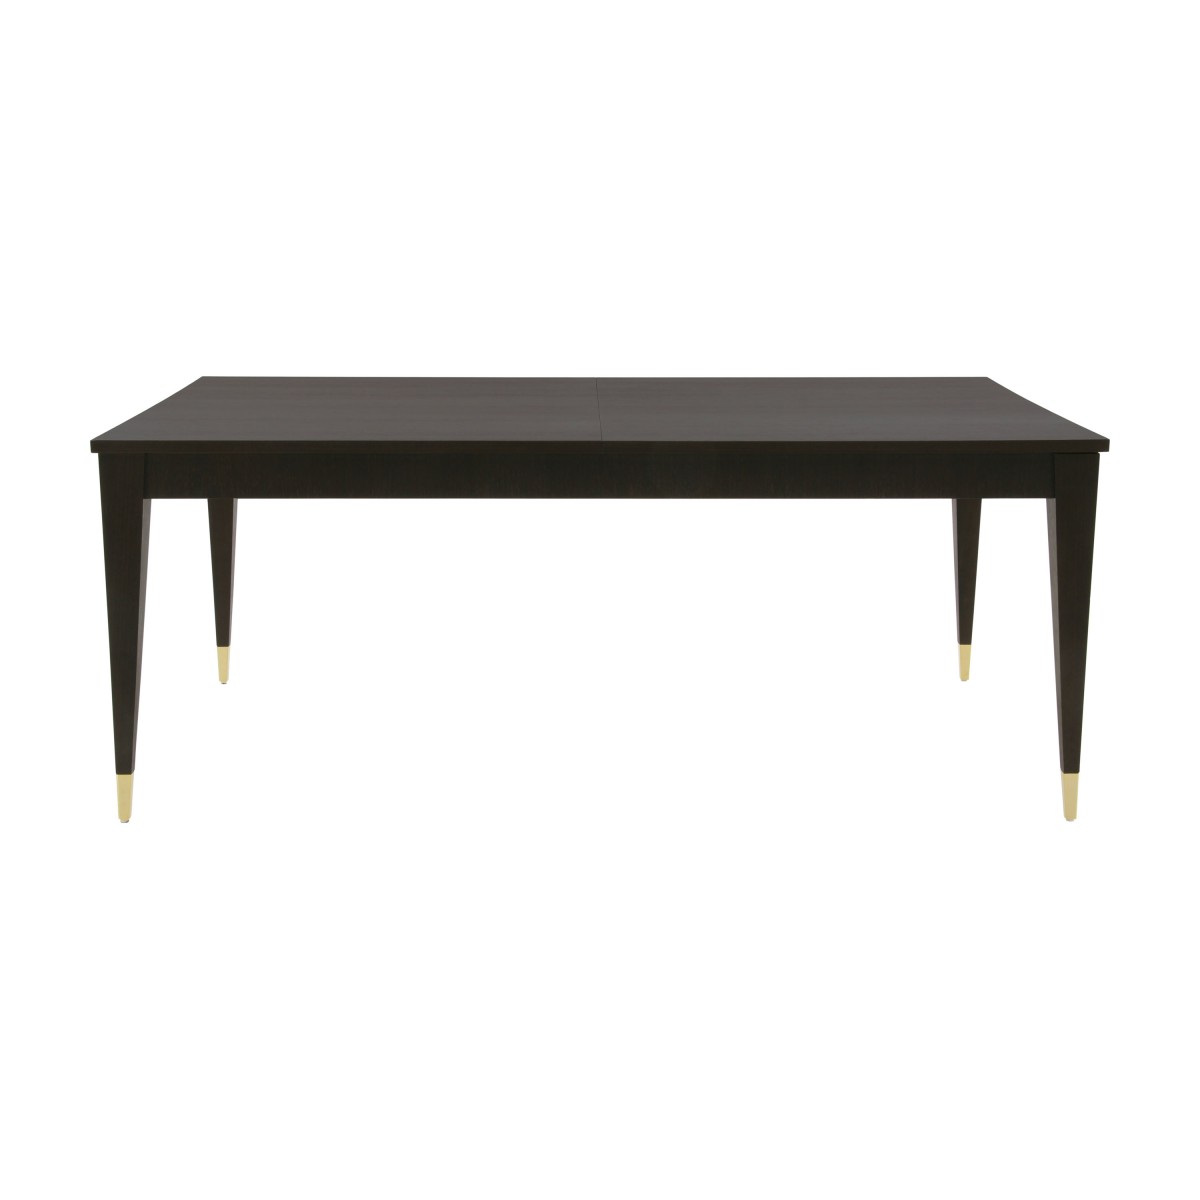 Italian modern extendible table - rectangular extendible table with double extentions - extendible table in wengè finish